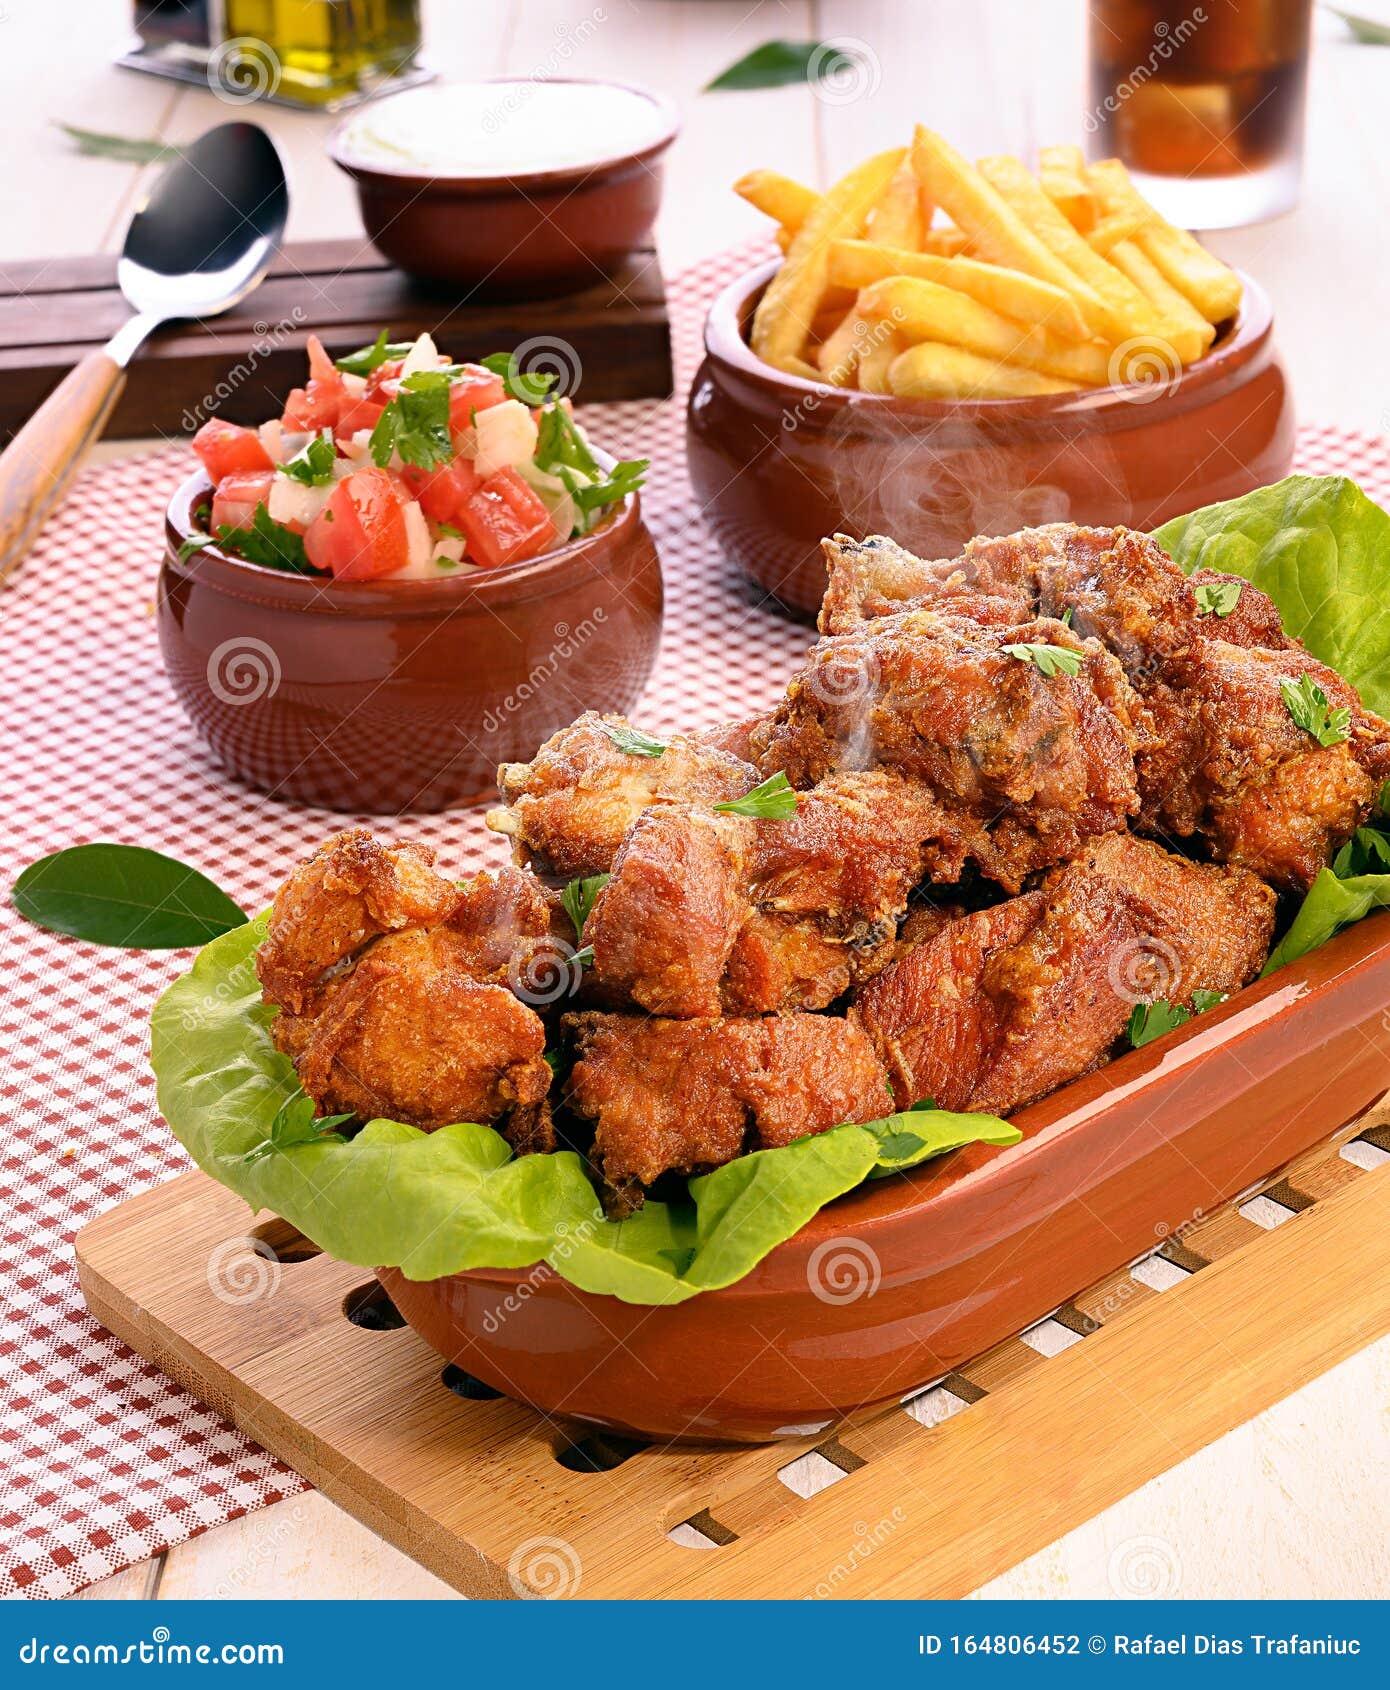 frango a passarinho - traditional brazilian fried chicken